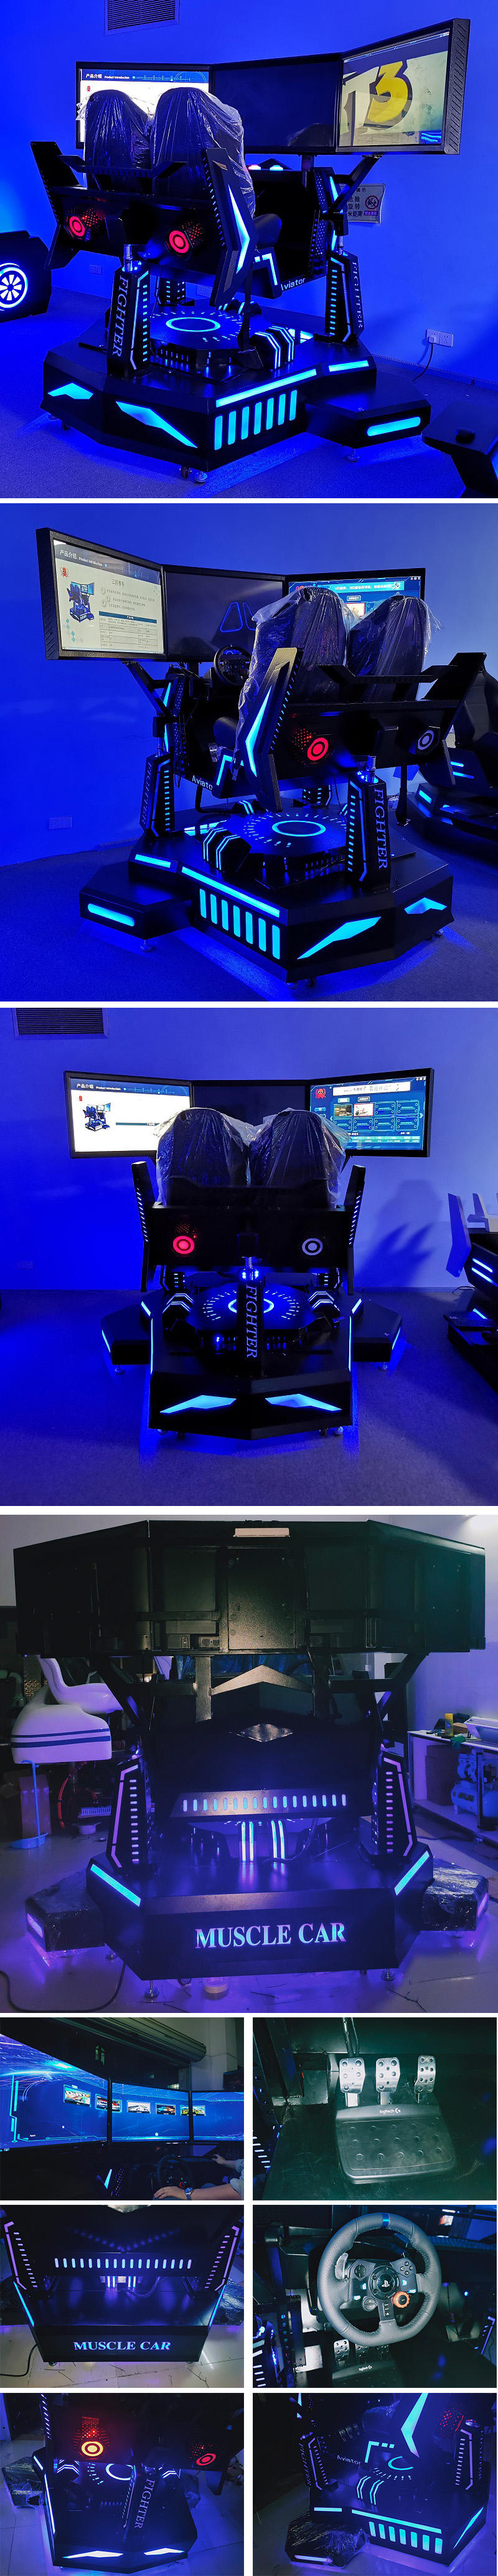 Three-screen-racing-car-Most-profitable-immersive-driving-simulator-virtual-reality-6-dof-dynamic-platform-Tomy-Arcade